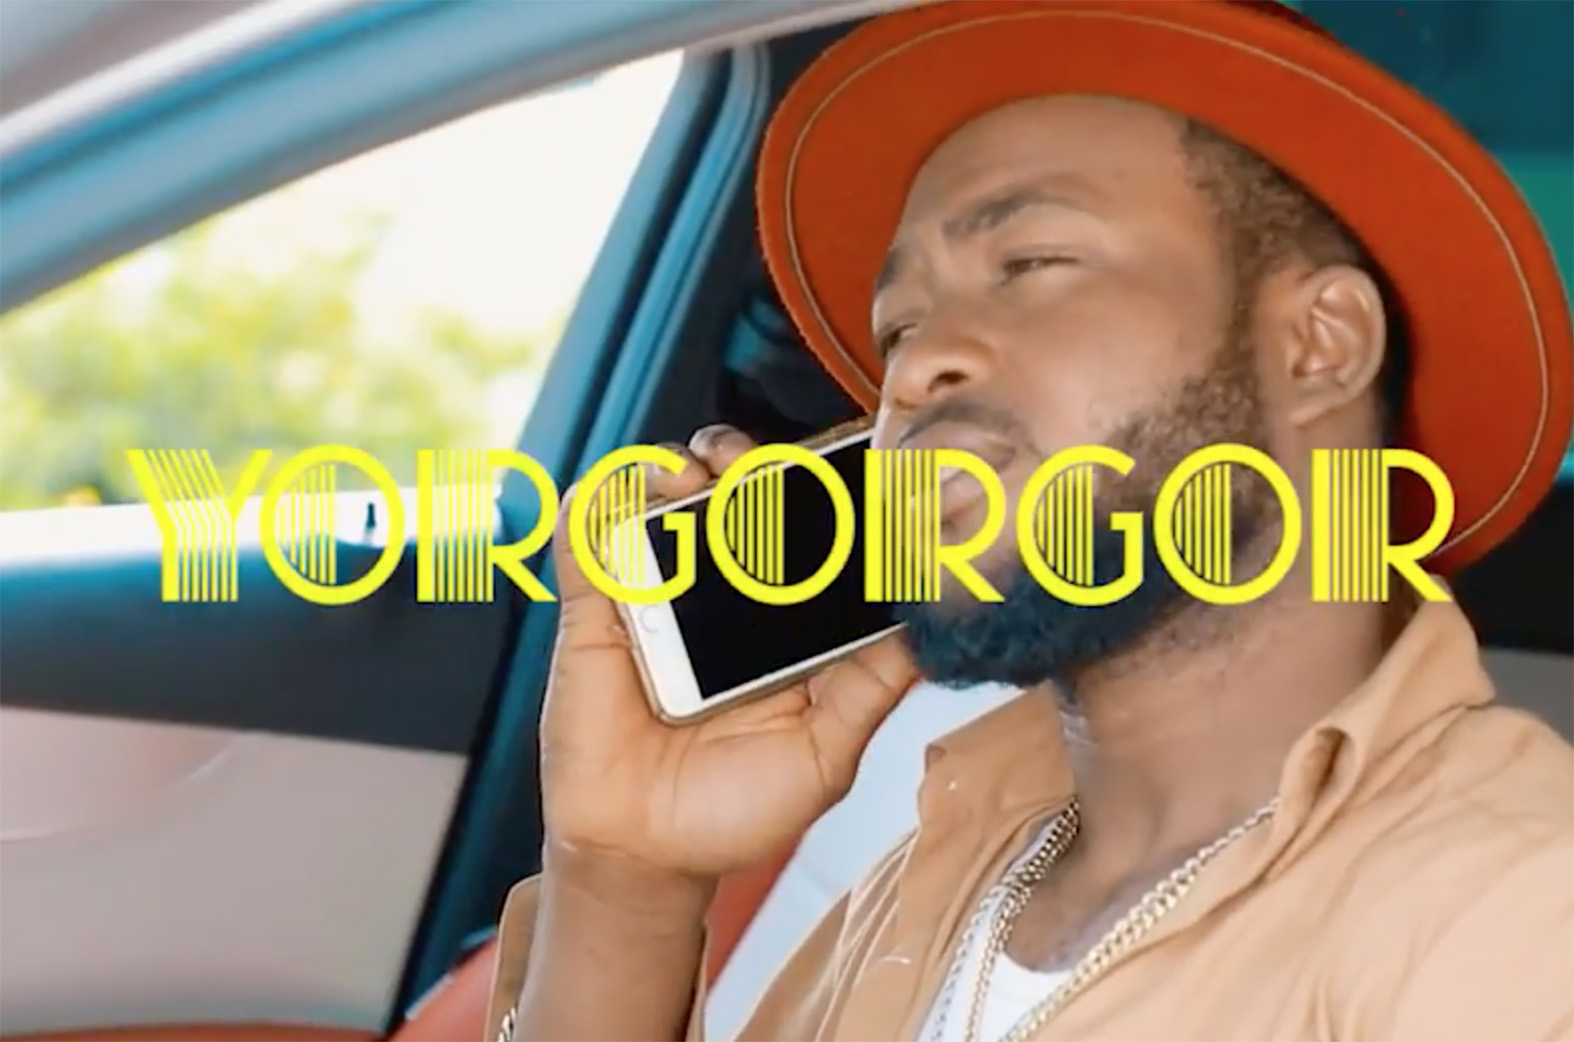 Video: Yorgorgor by Jorvago feat. Kobby Shot